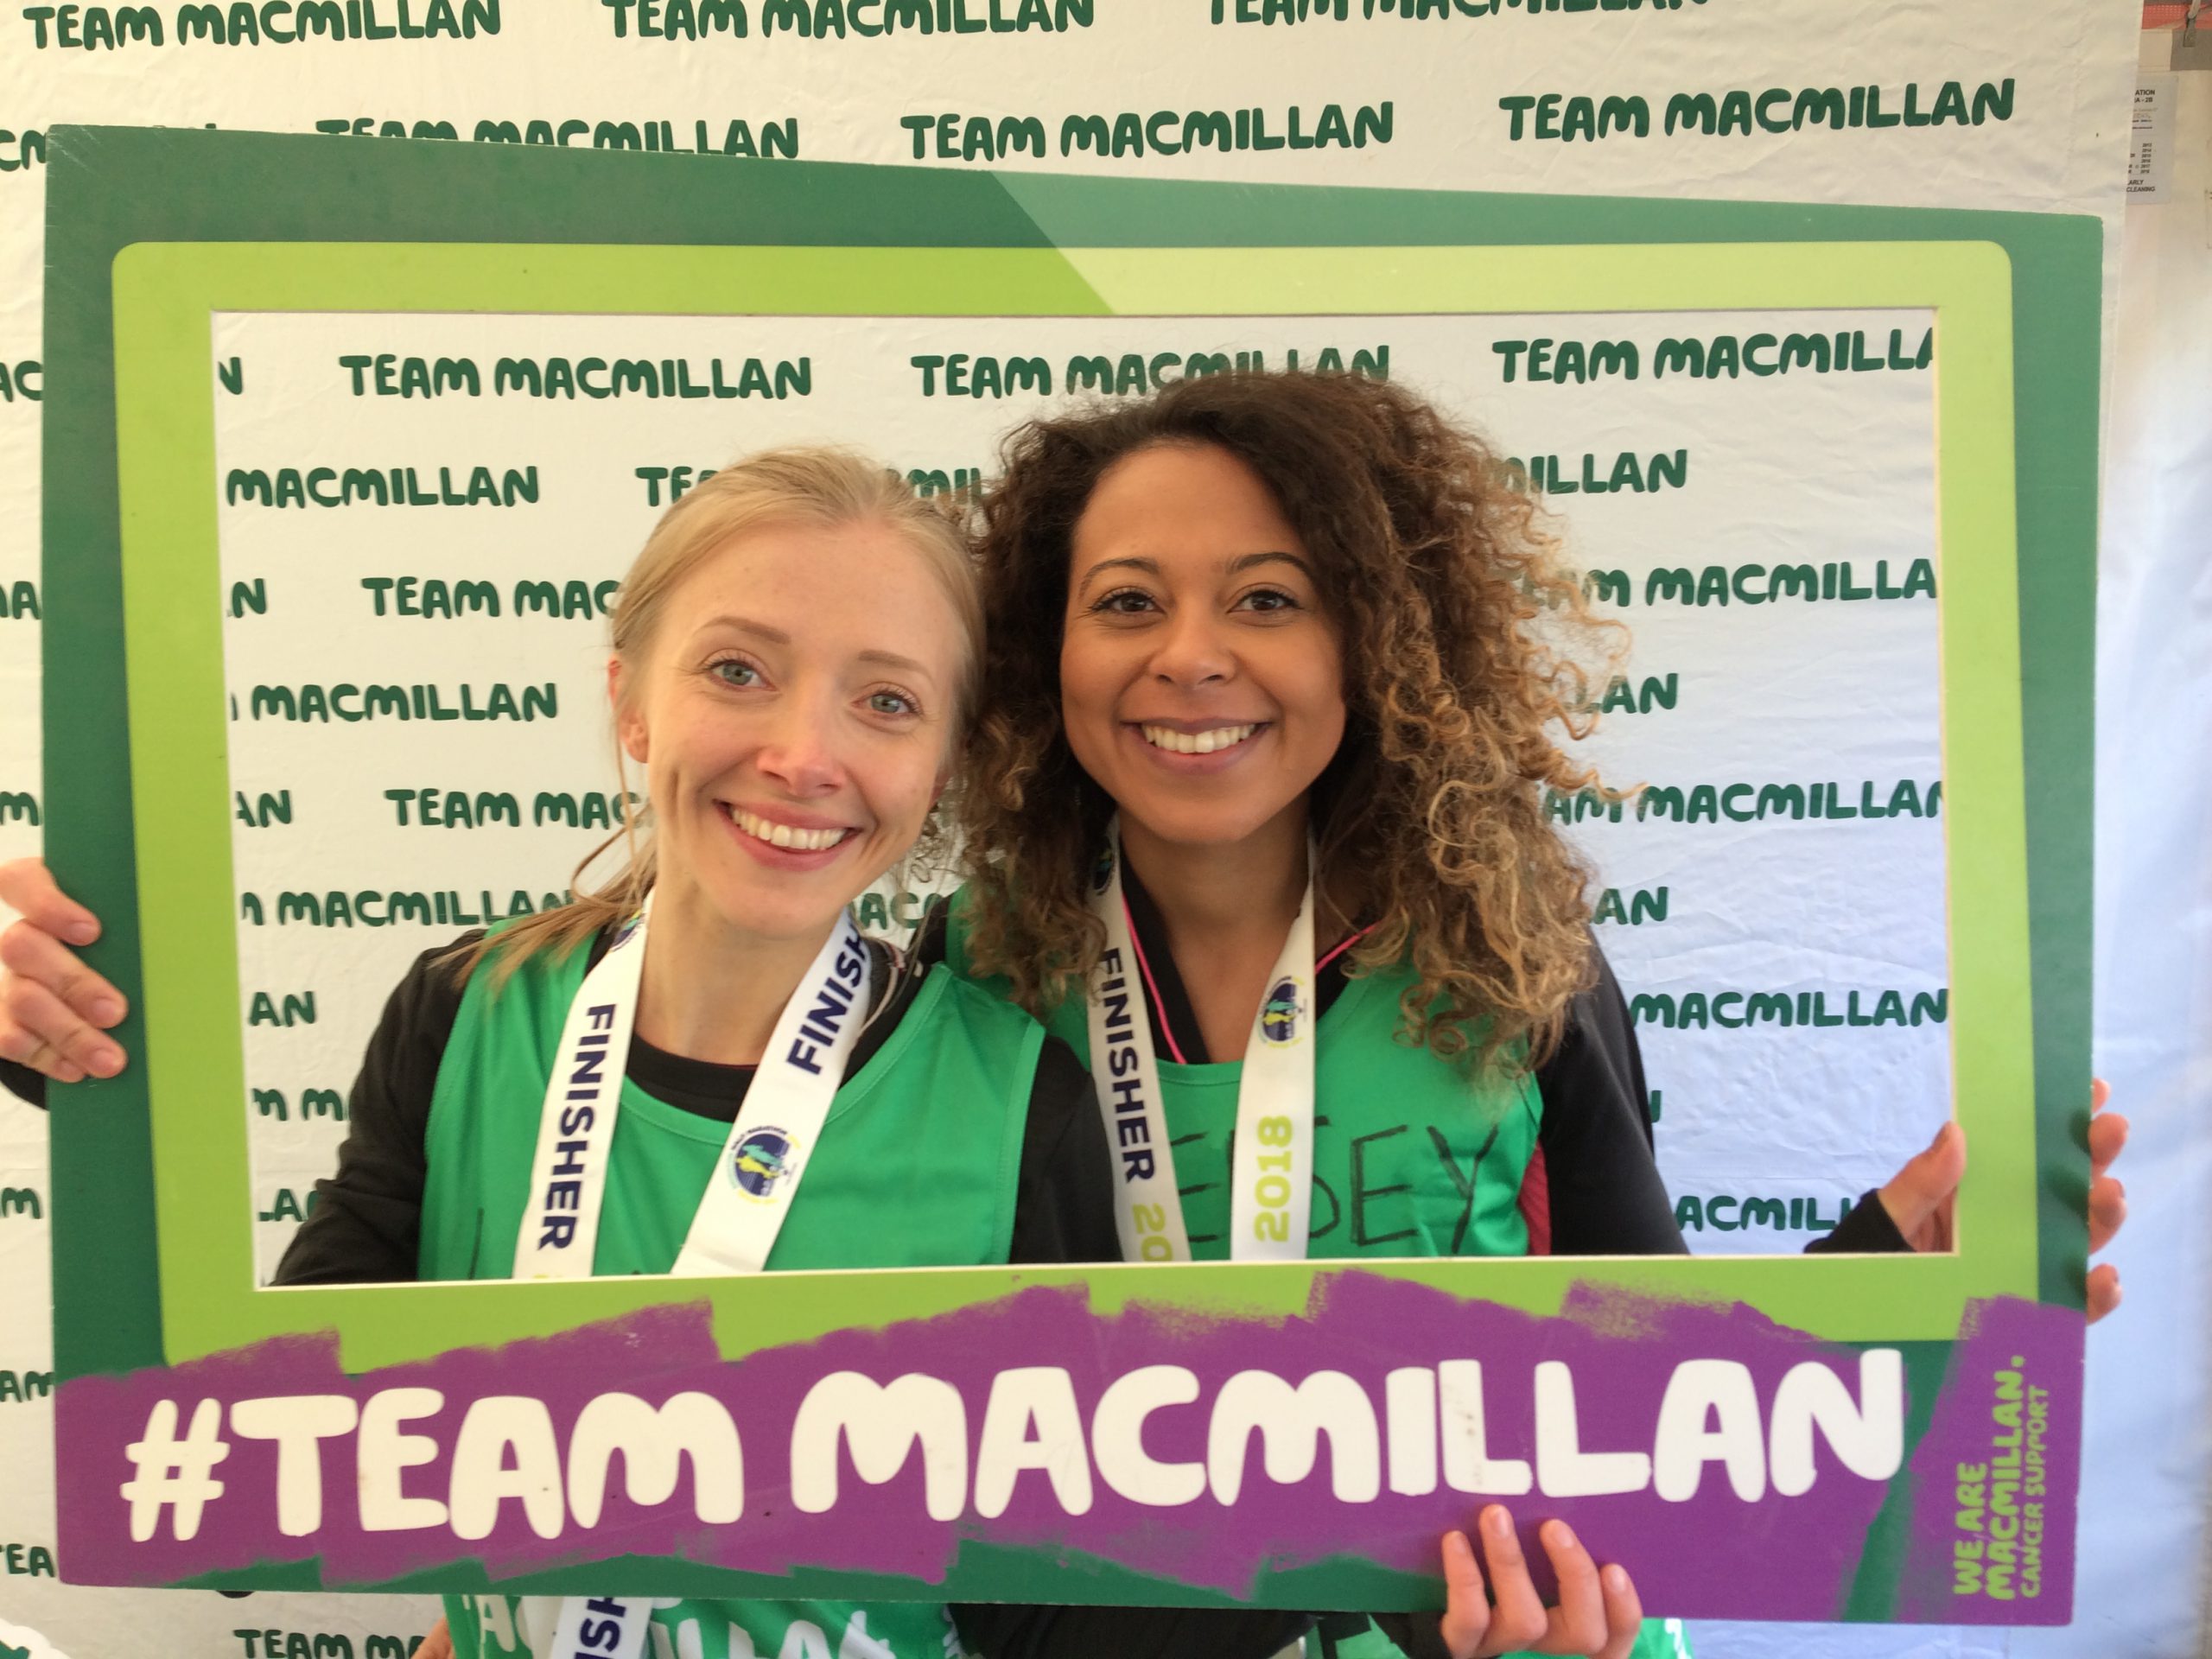 Team Macmillan runners